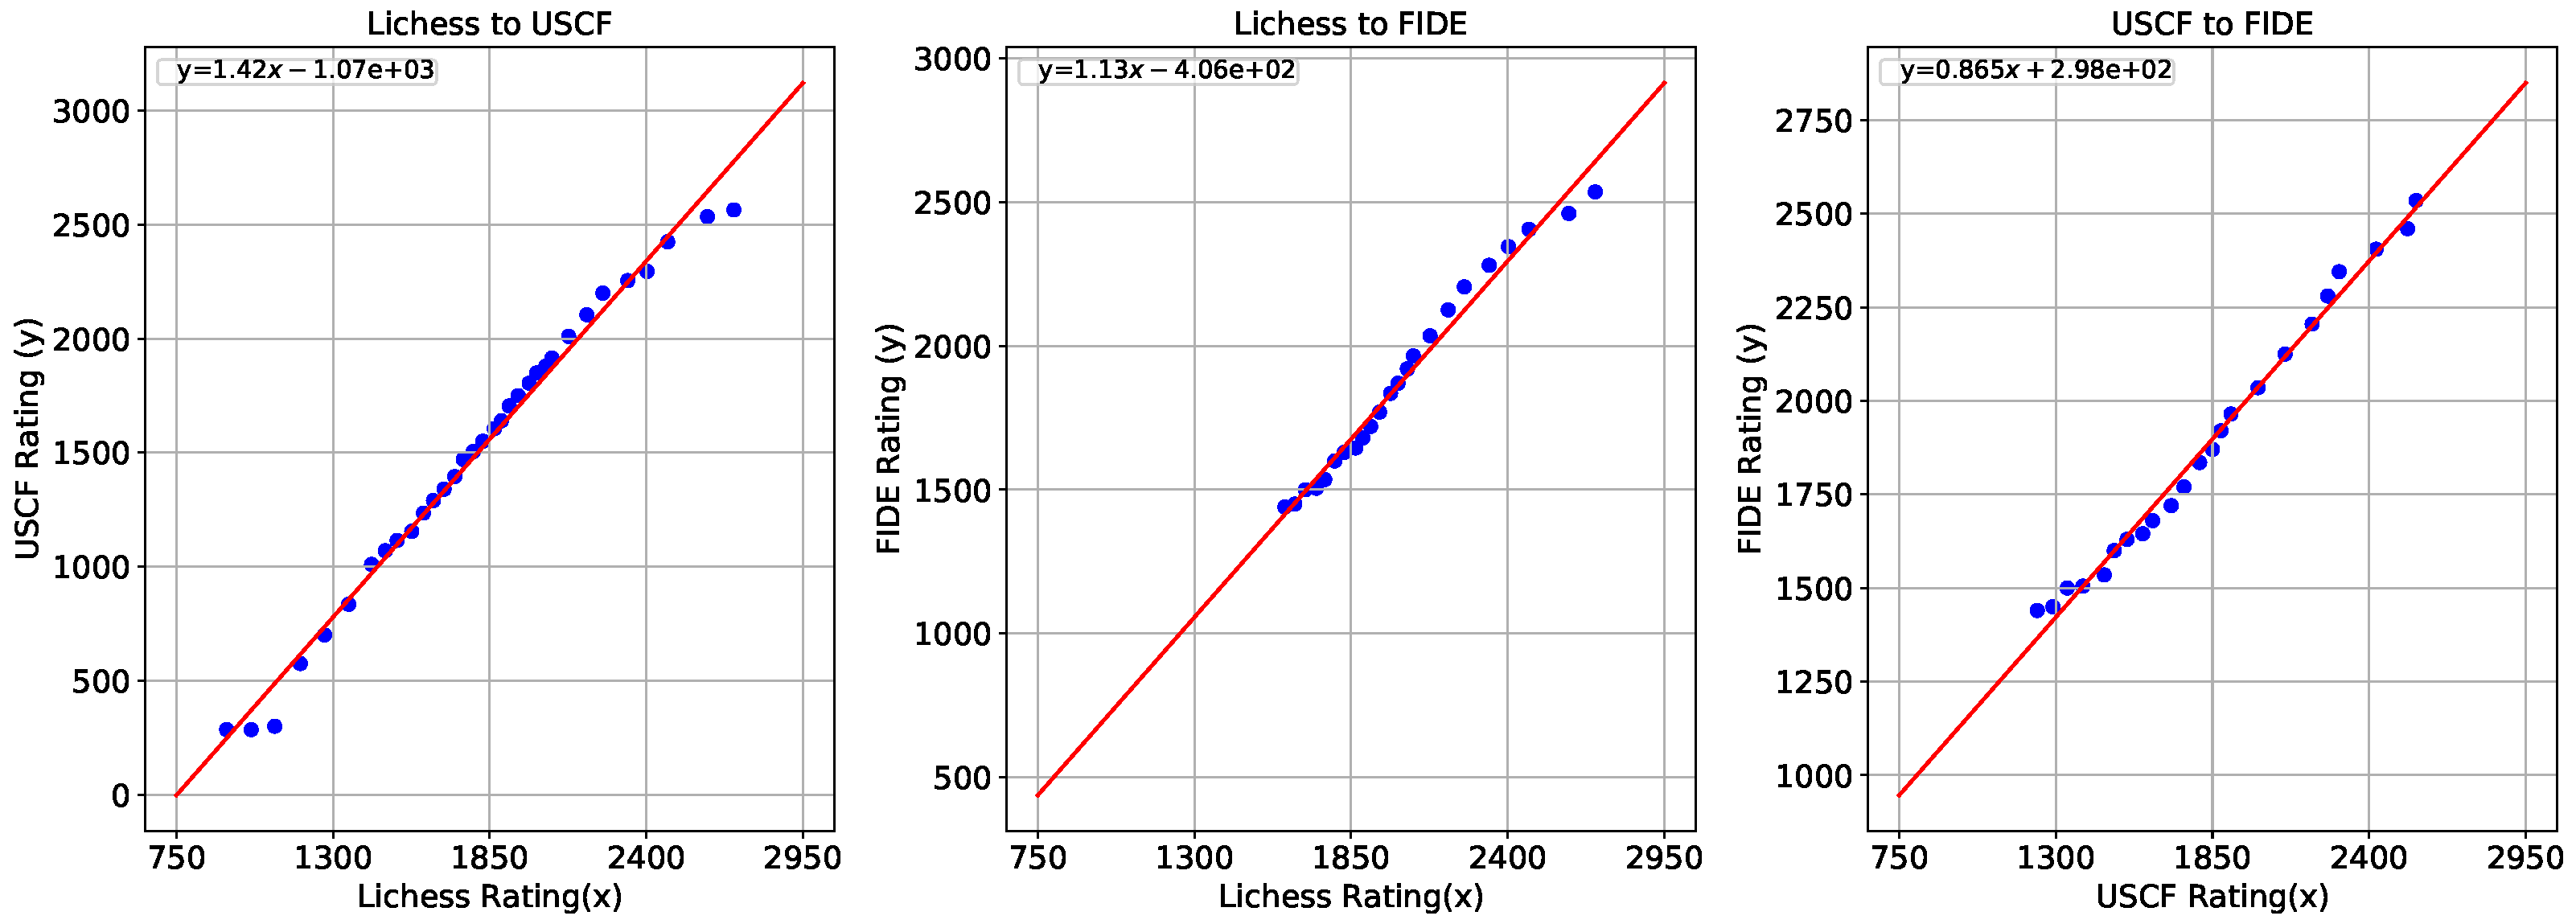 Chess.com, Fide, Lichess, and USCF Rating Comparison 